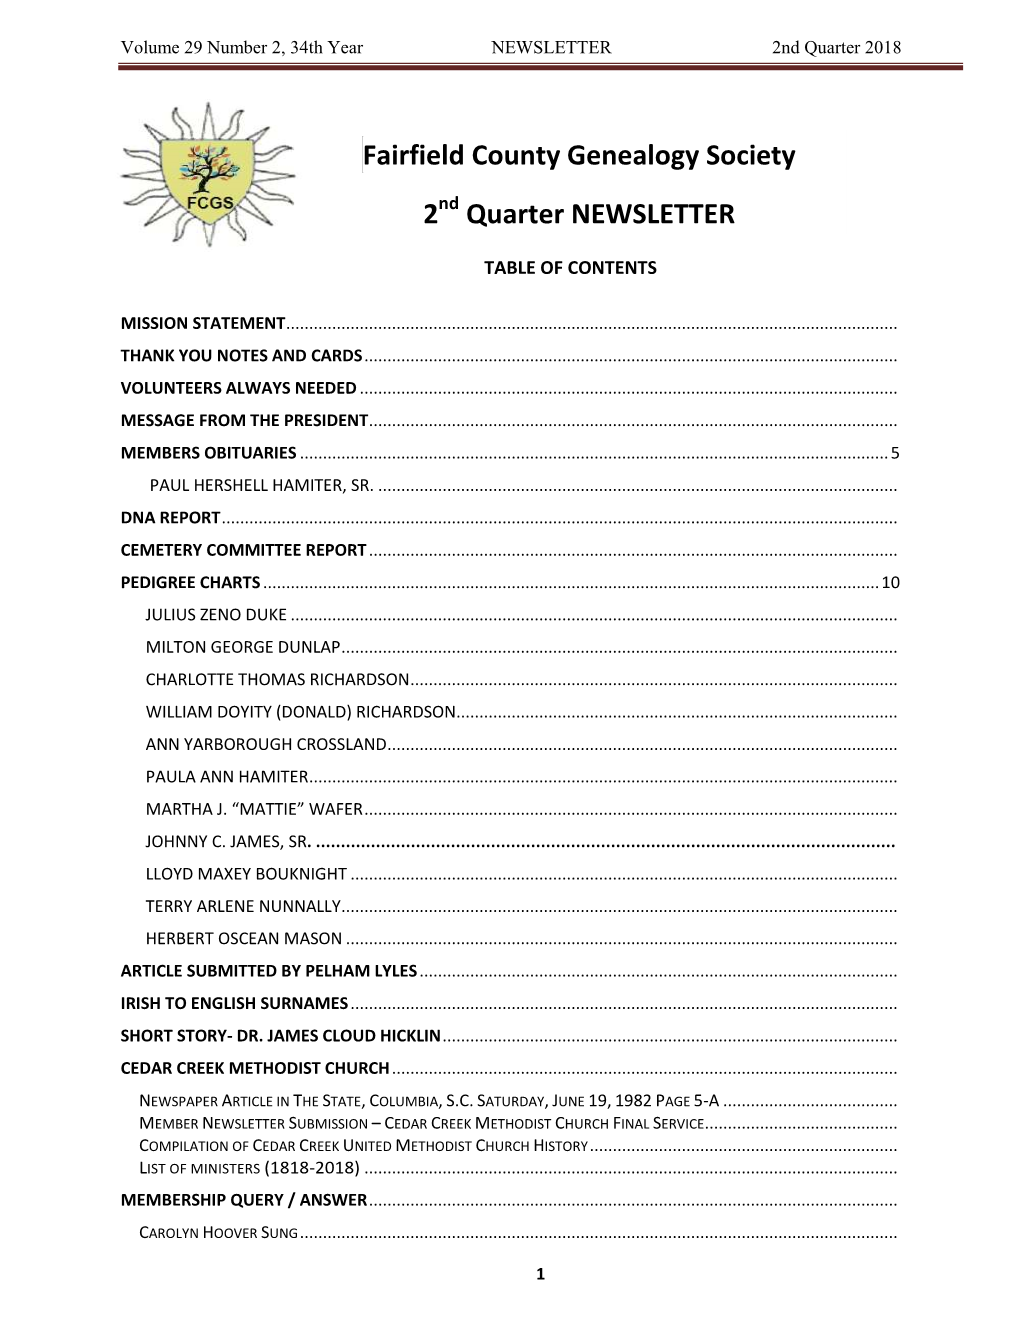 Fairfield County Genealogy Society 2 Quarter NEWSLETTER